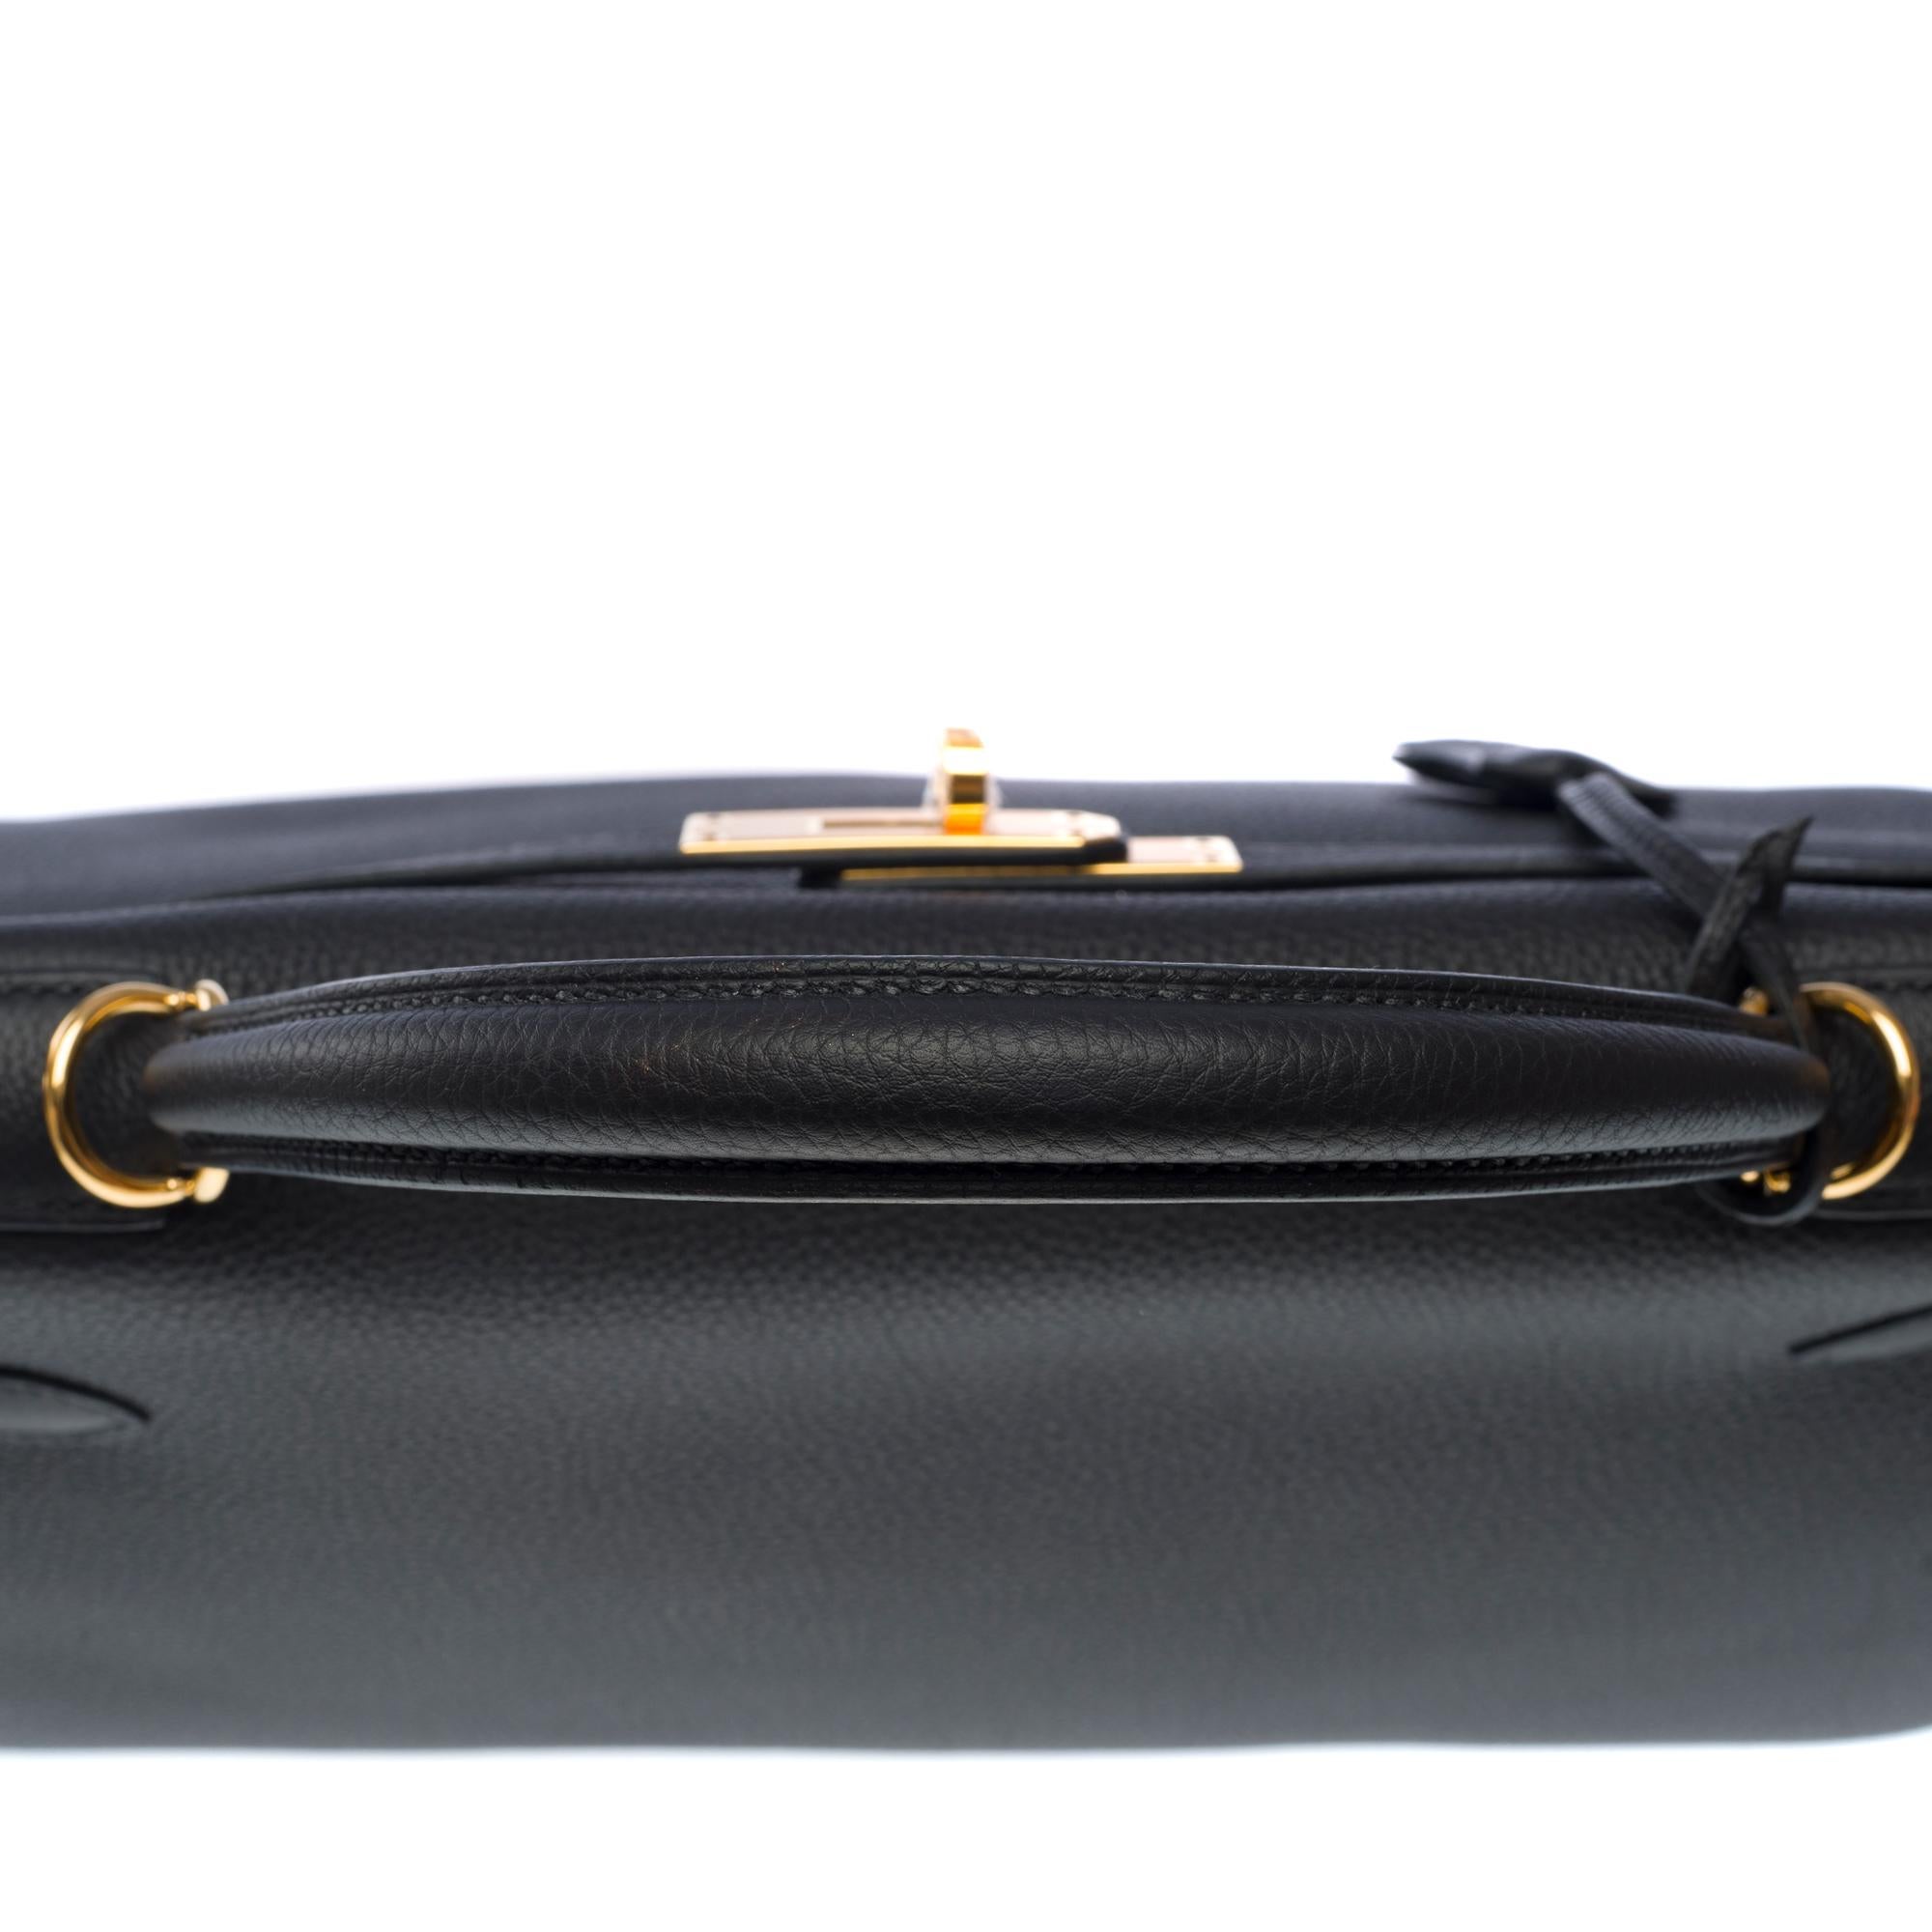 New Hermès Kelly 32 retourne handbag strap in Black Togo leather, GHW 6